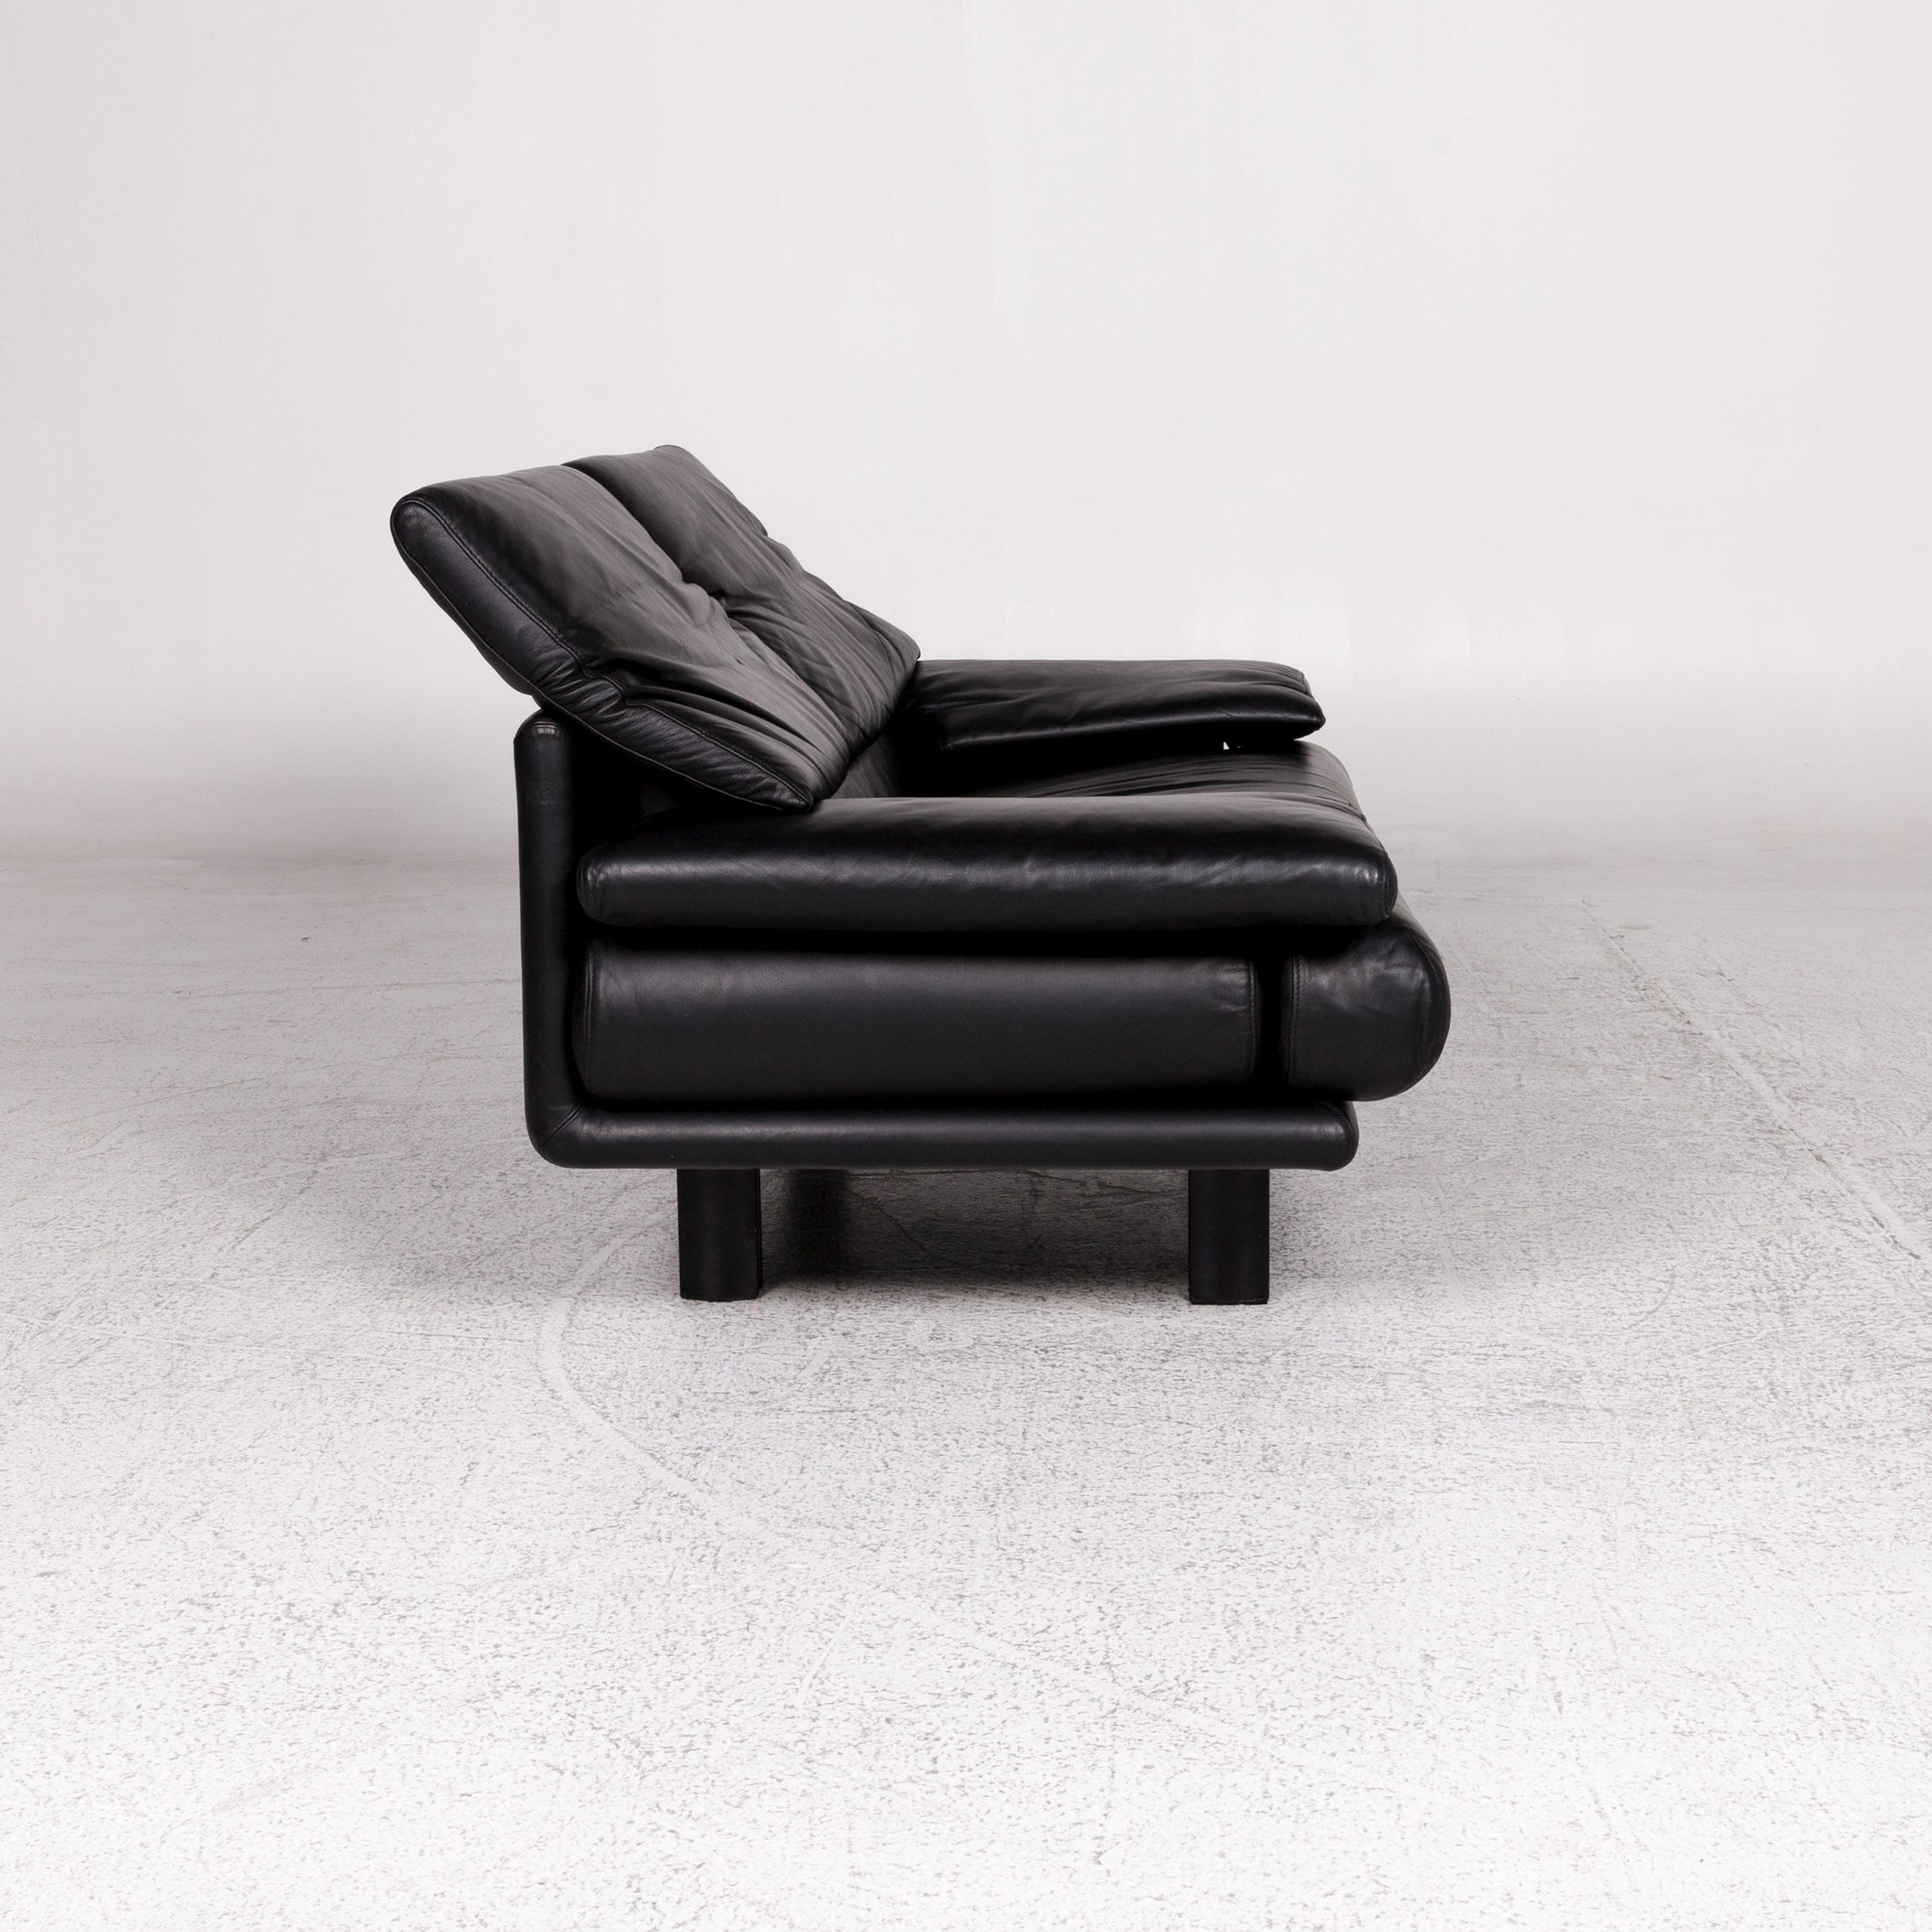 B & B Italia Alanda Leather Sofa Black Two-Seat Function Paolo Piva Couch 2